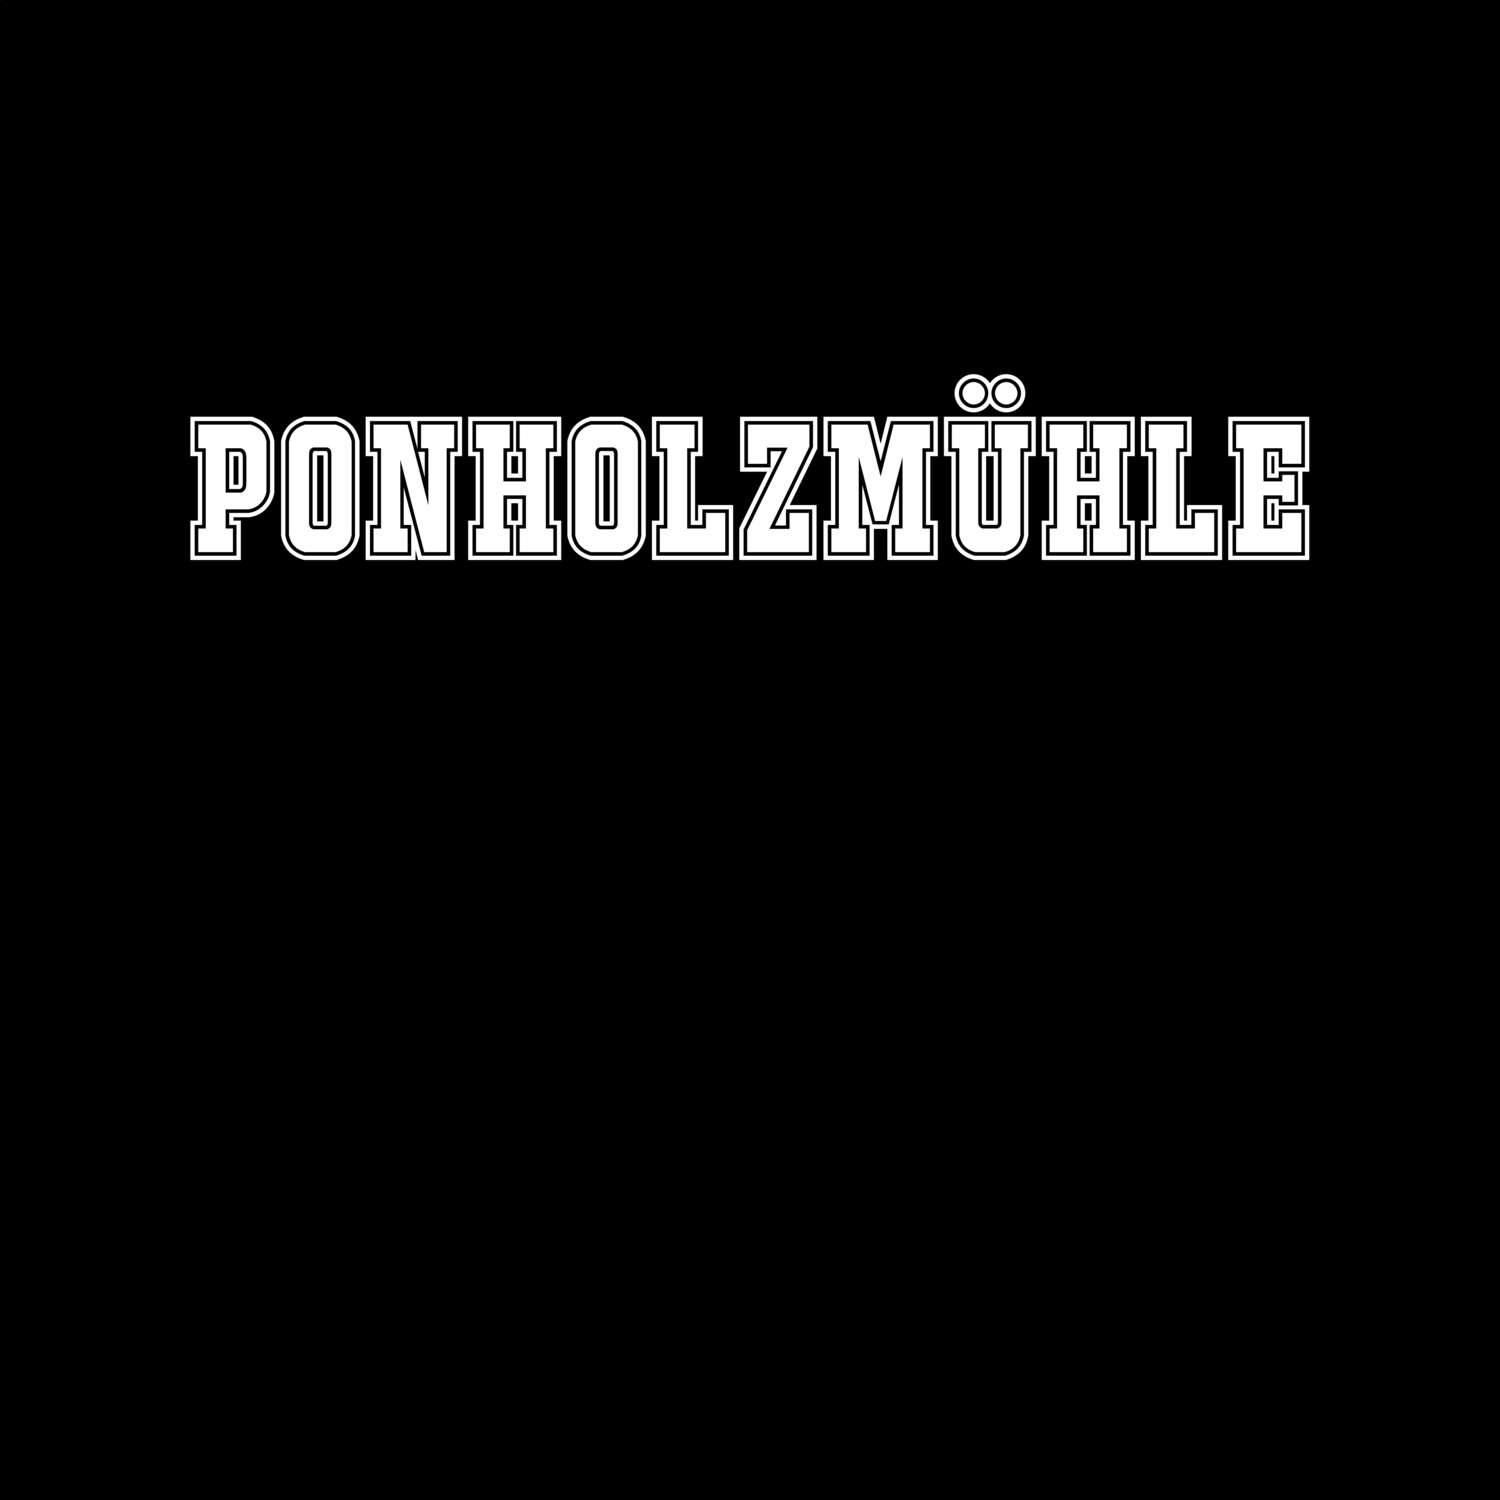 Ponholzmühle T-Shirt »Classic«